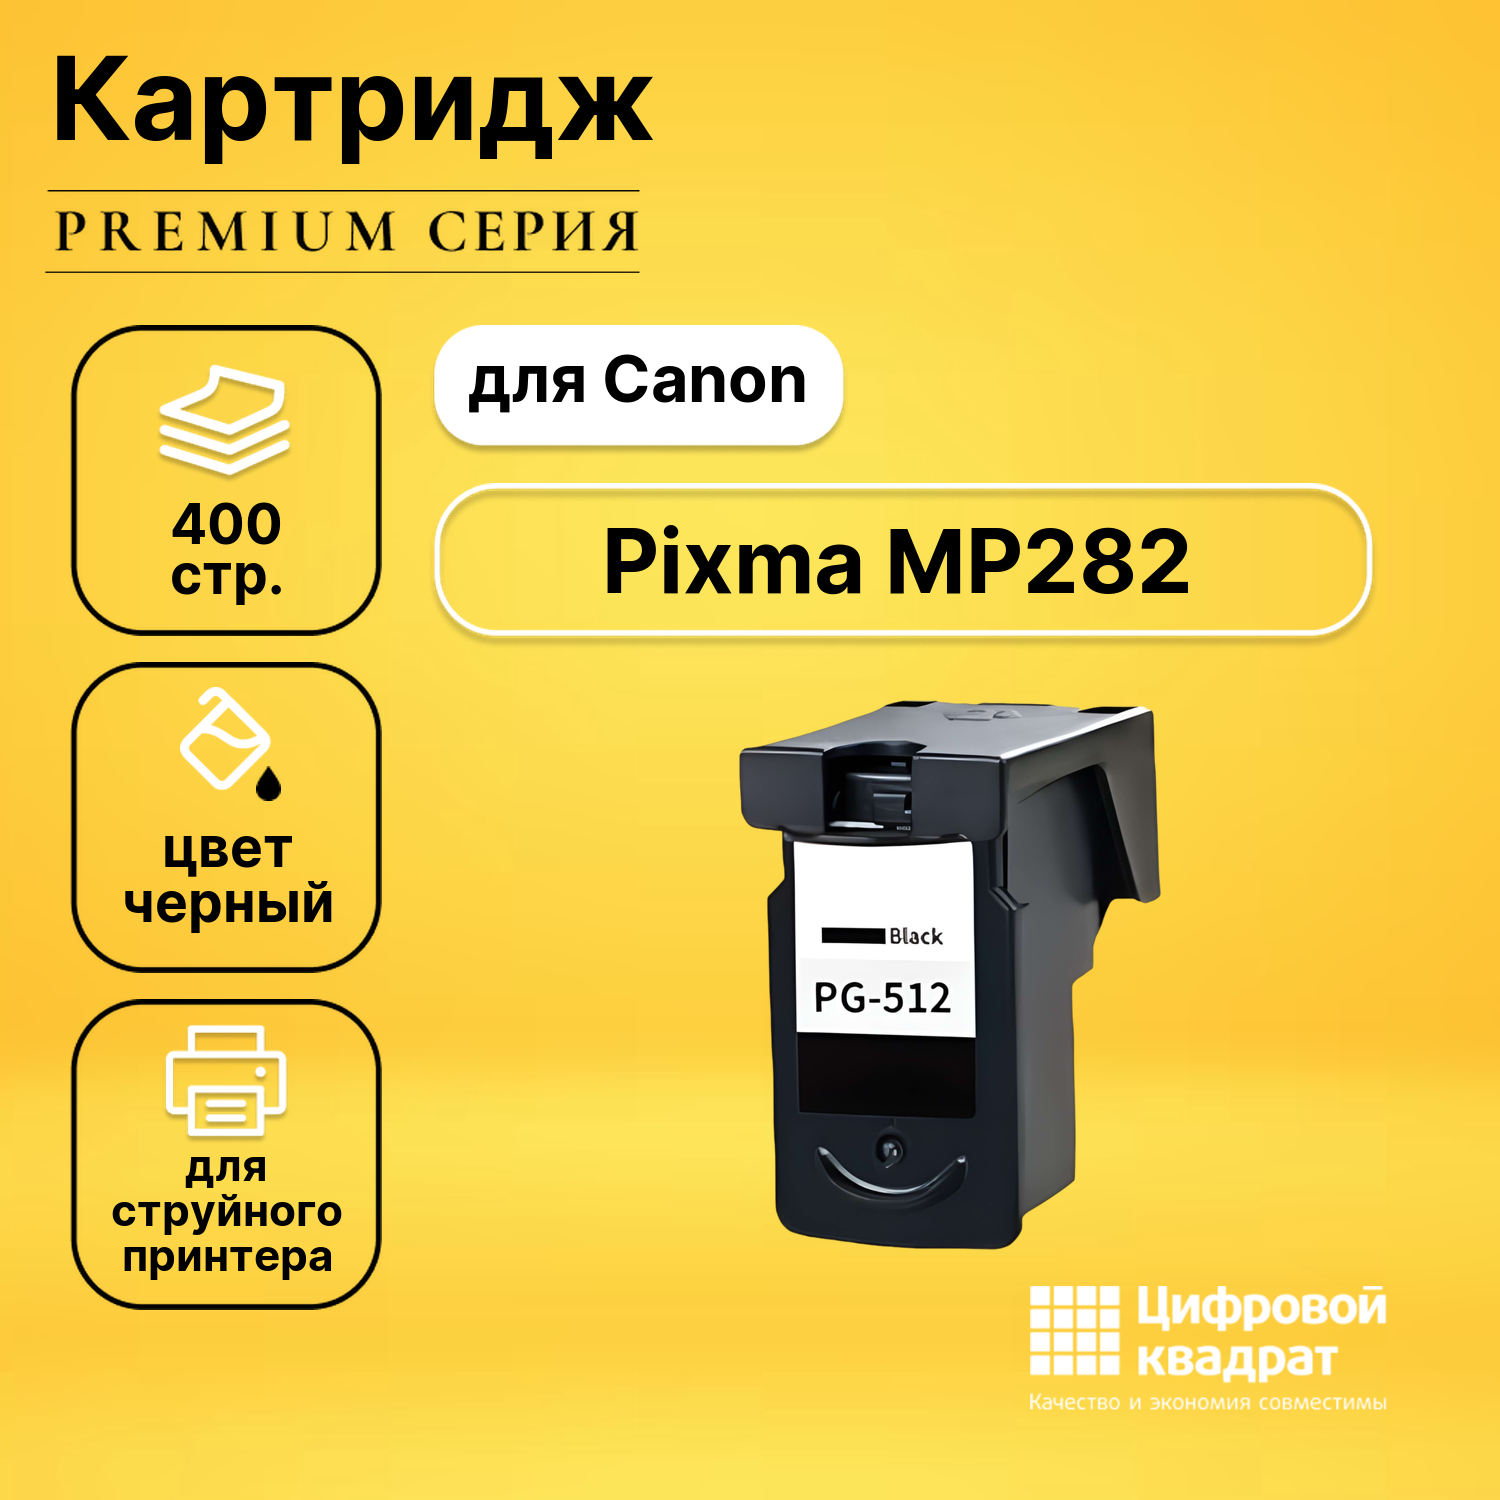 Картридж DS для Canon Pixma MP282 совместимый